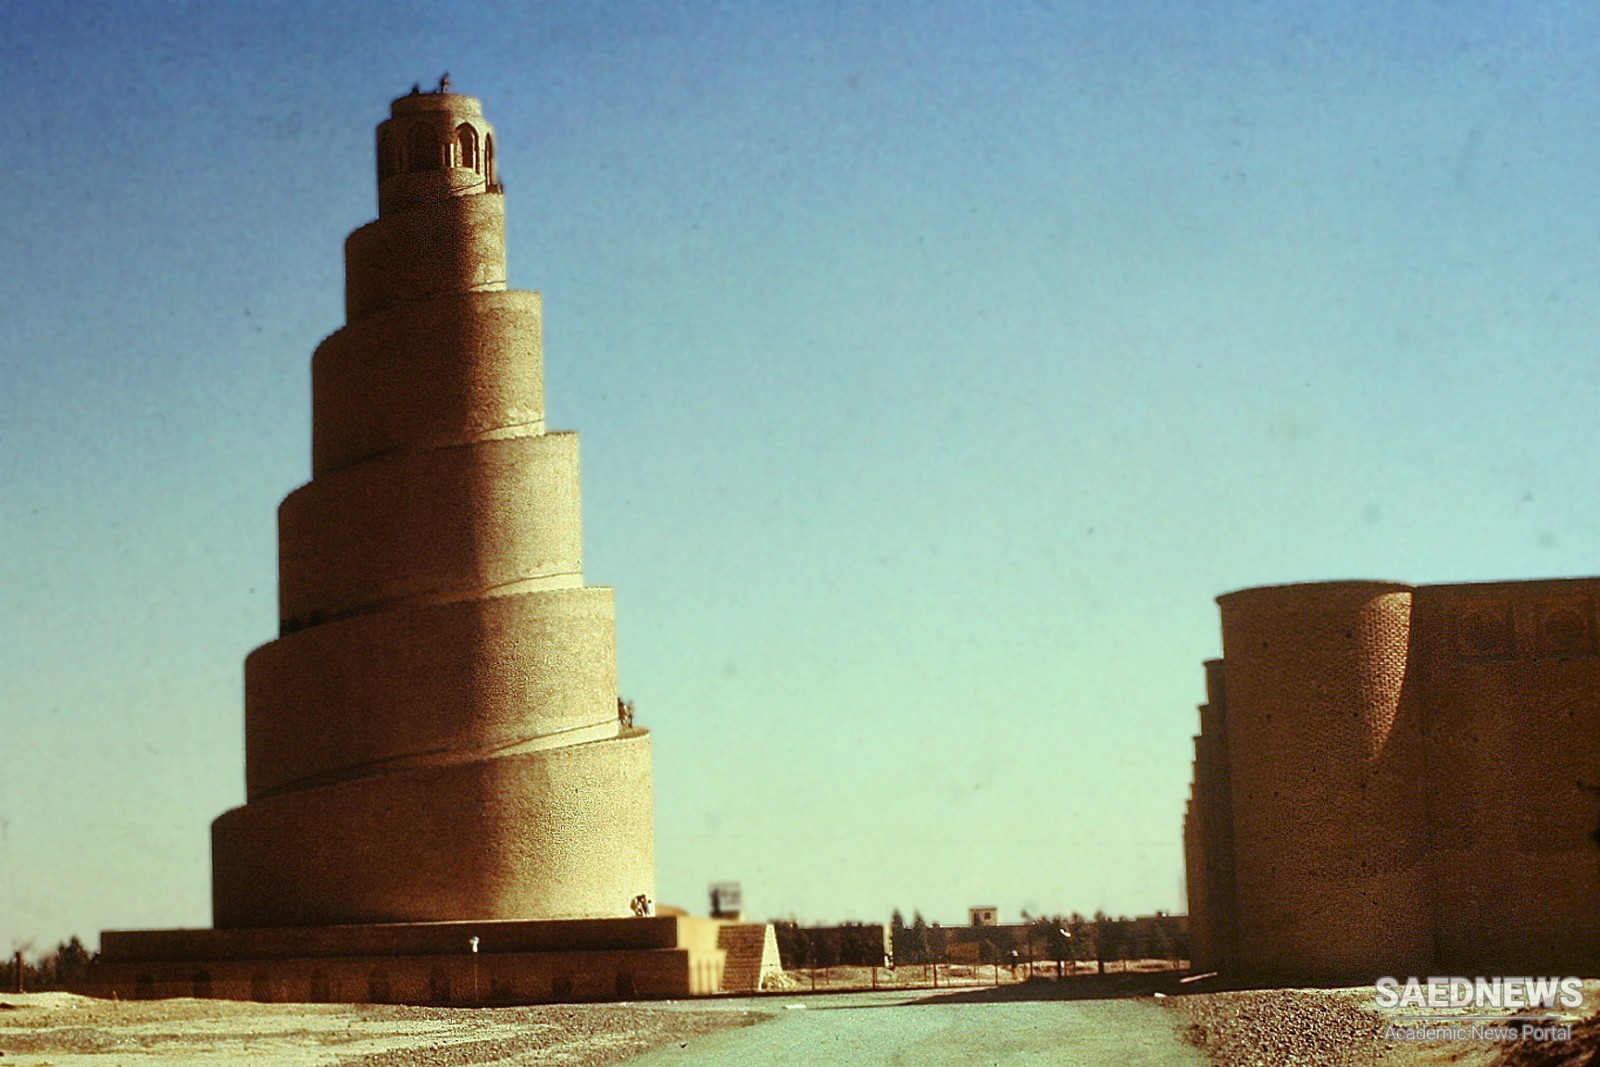 The Spiral Minaret Of The Great Mosque Of Samara, Iraq